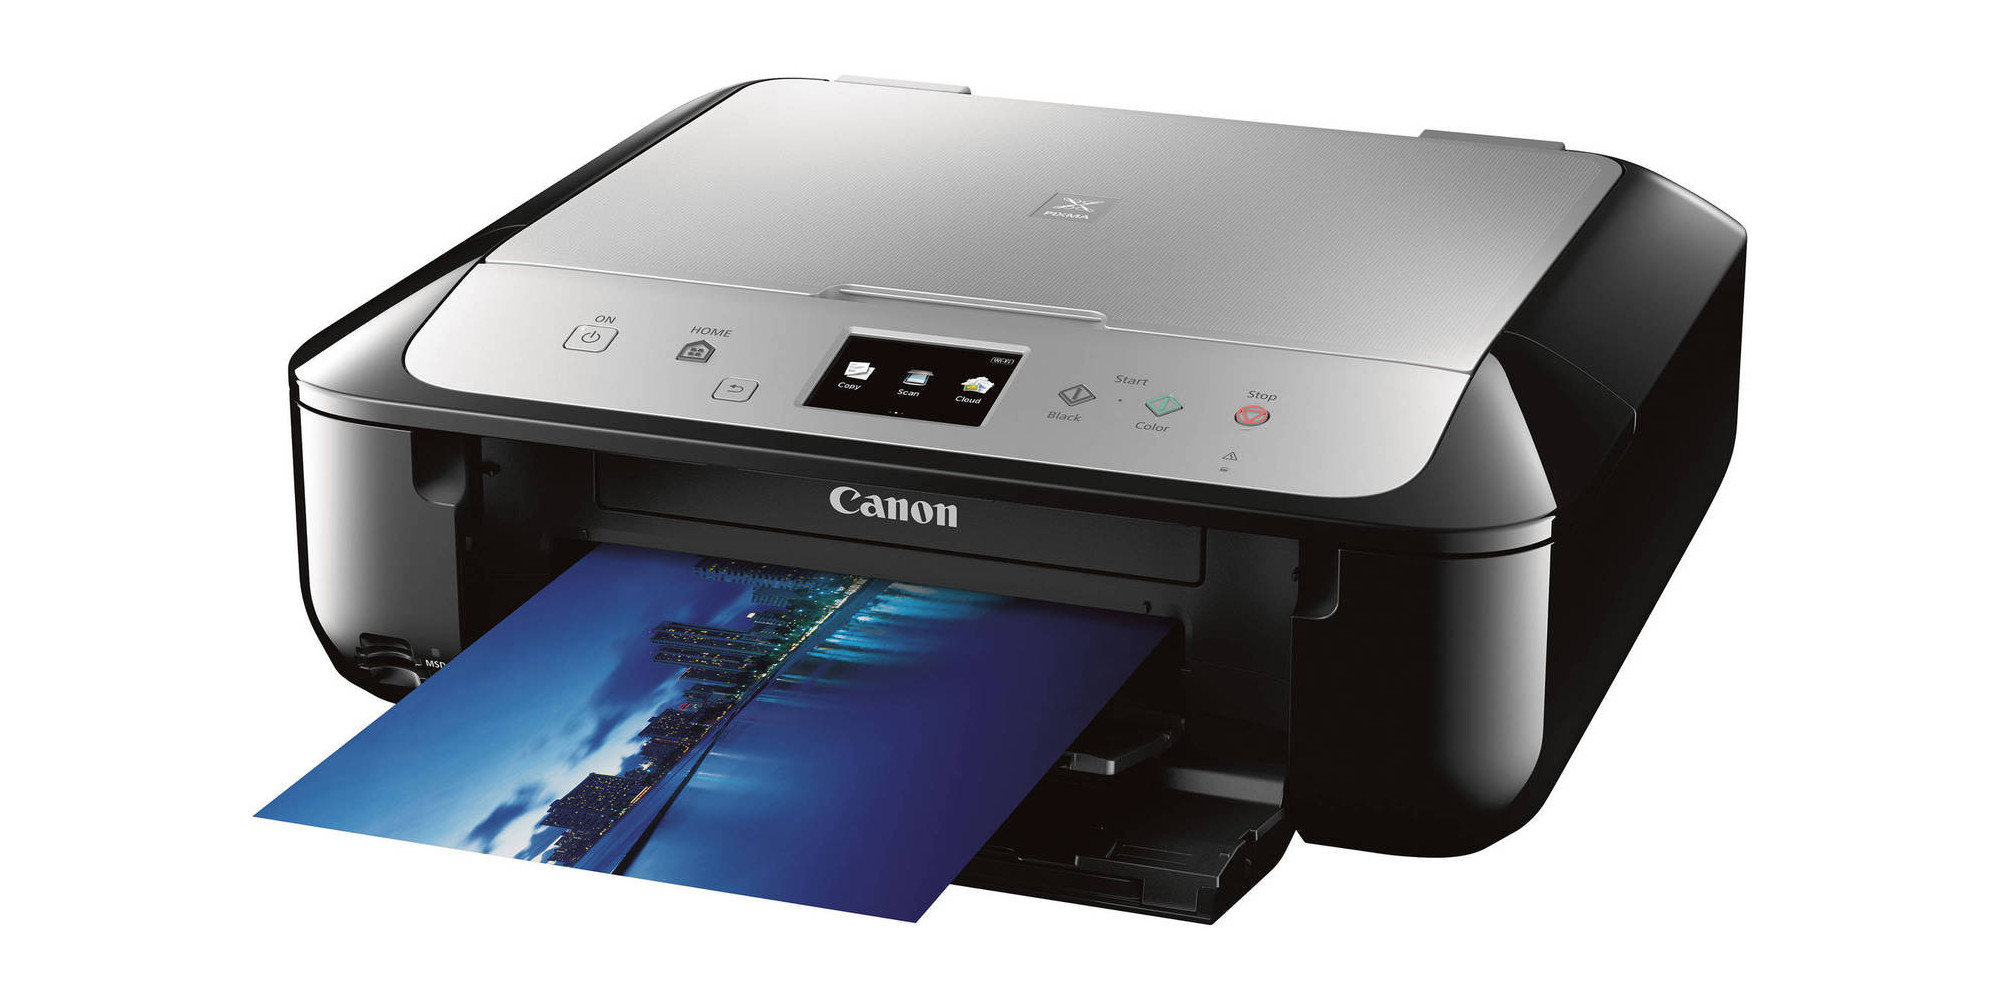 set up canon printer pixma ts6100 for mac